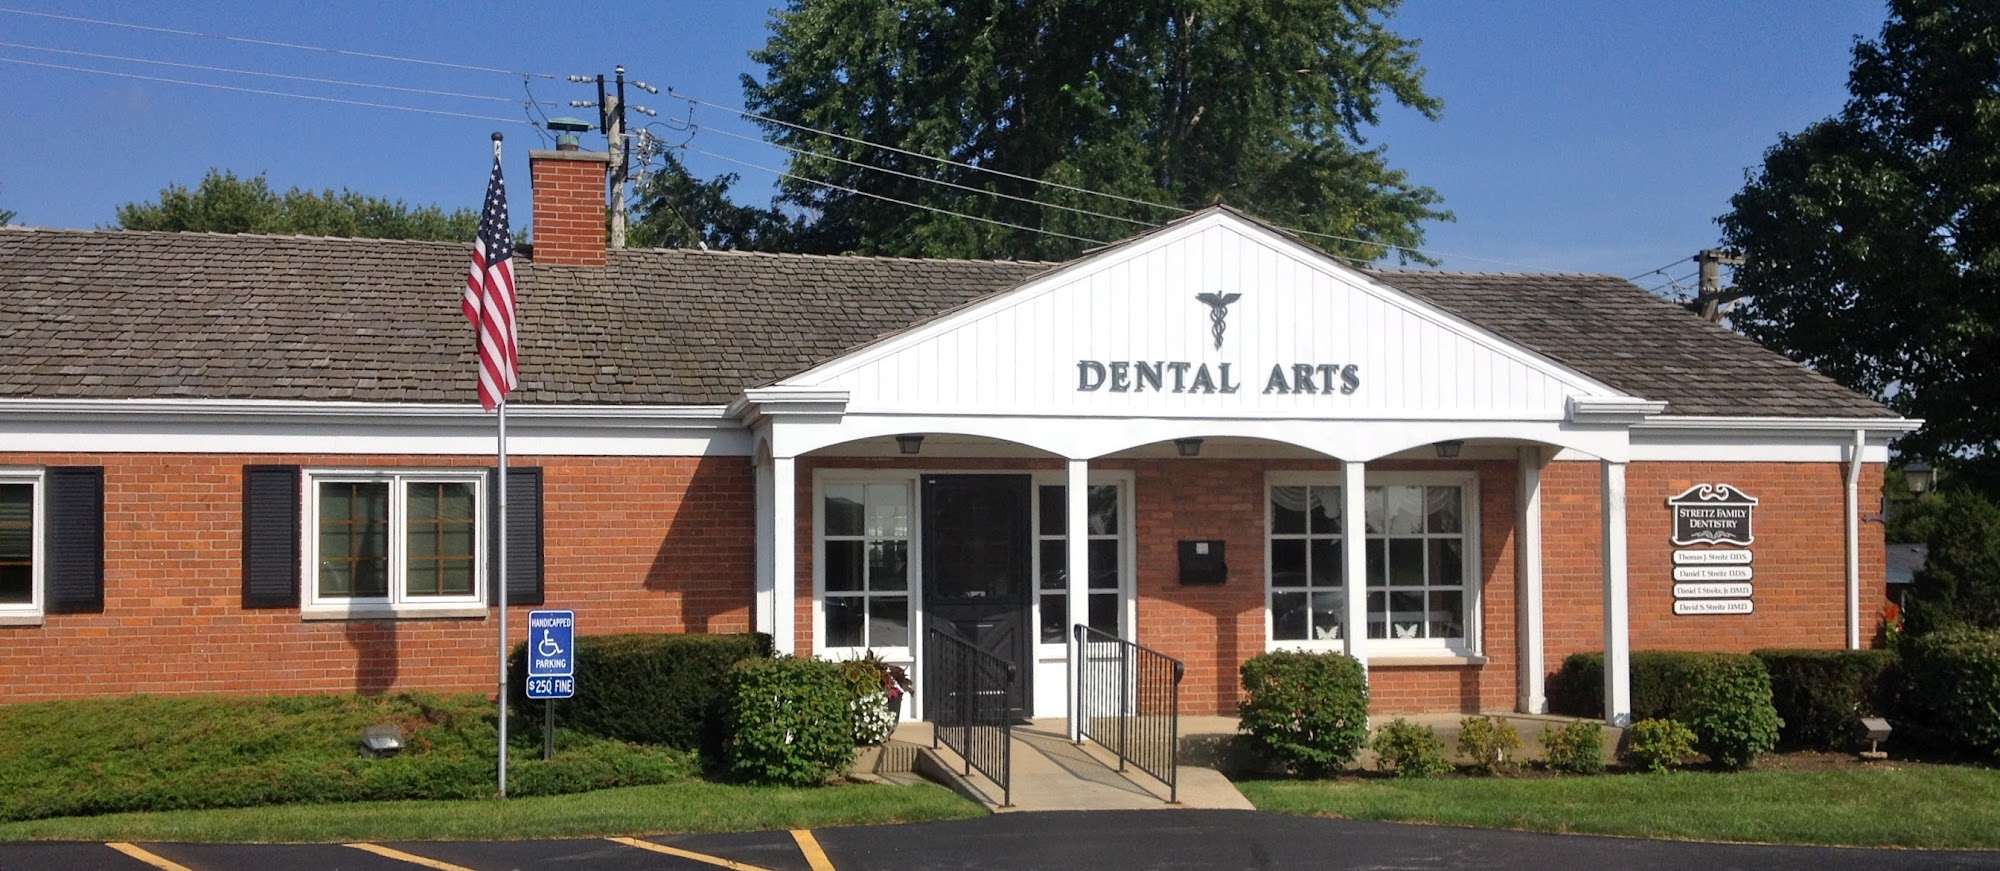 Streitz Dental Arts